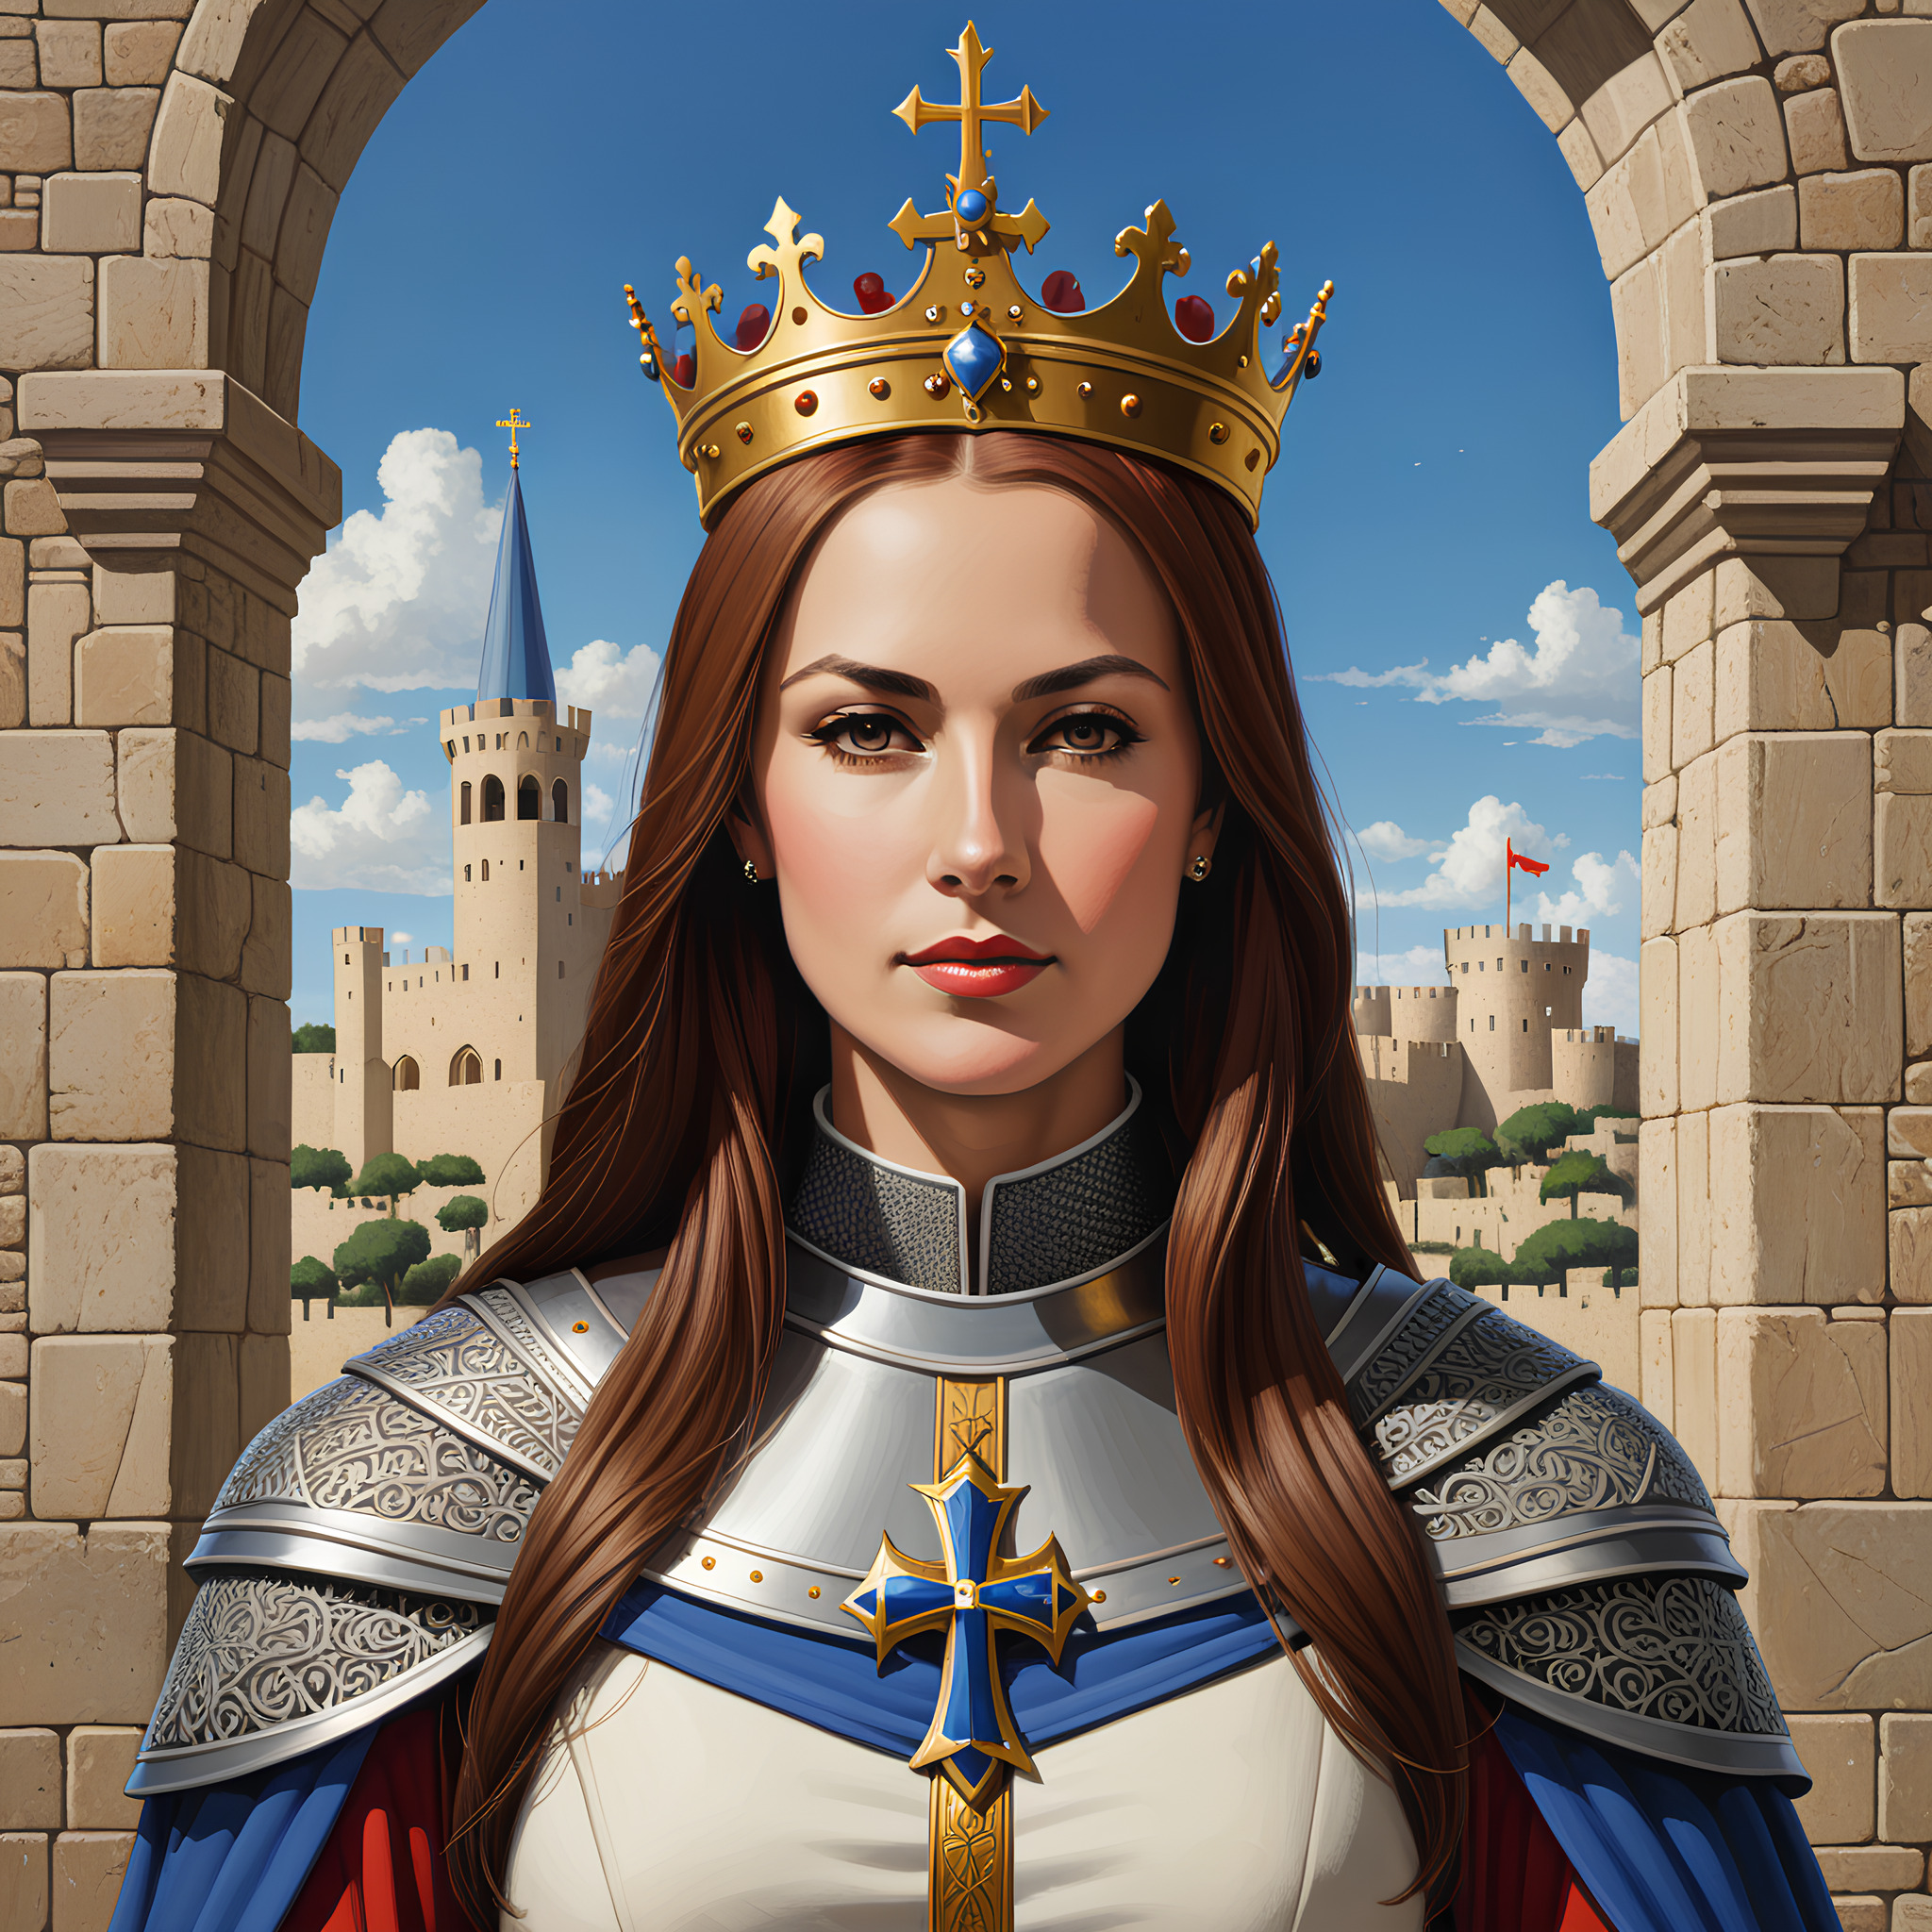 Бесплатное фото Королева крестоносцев